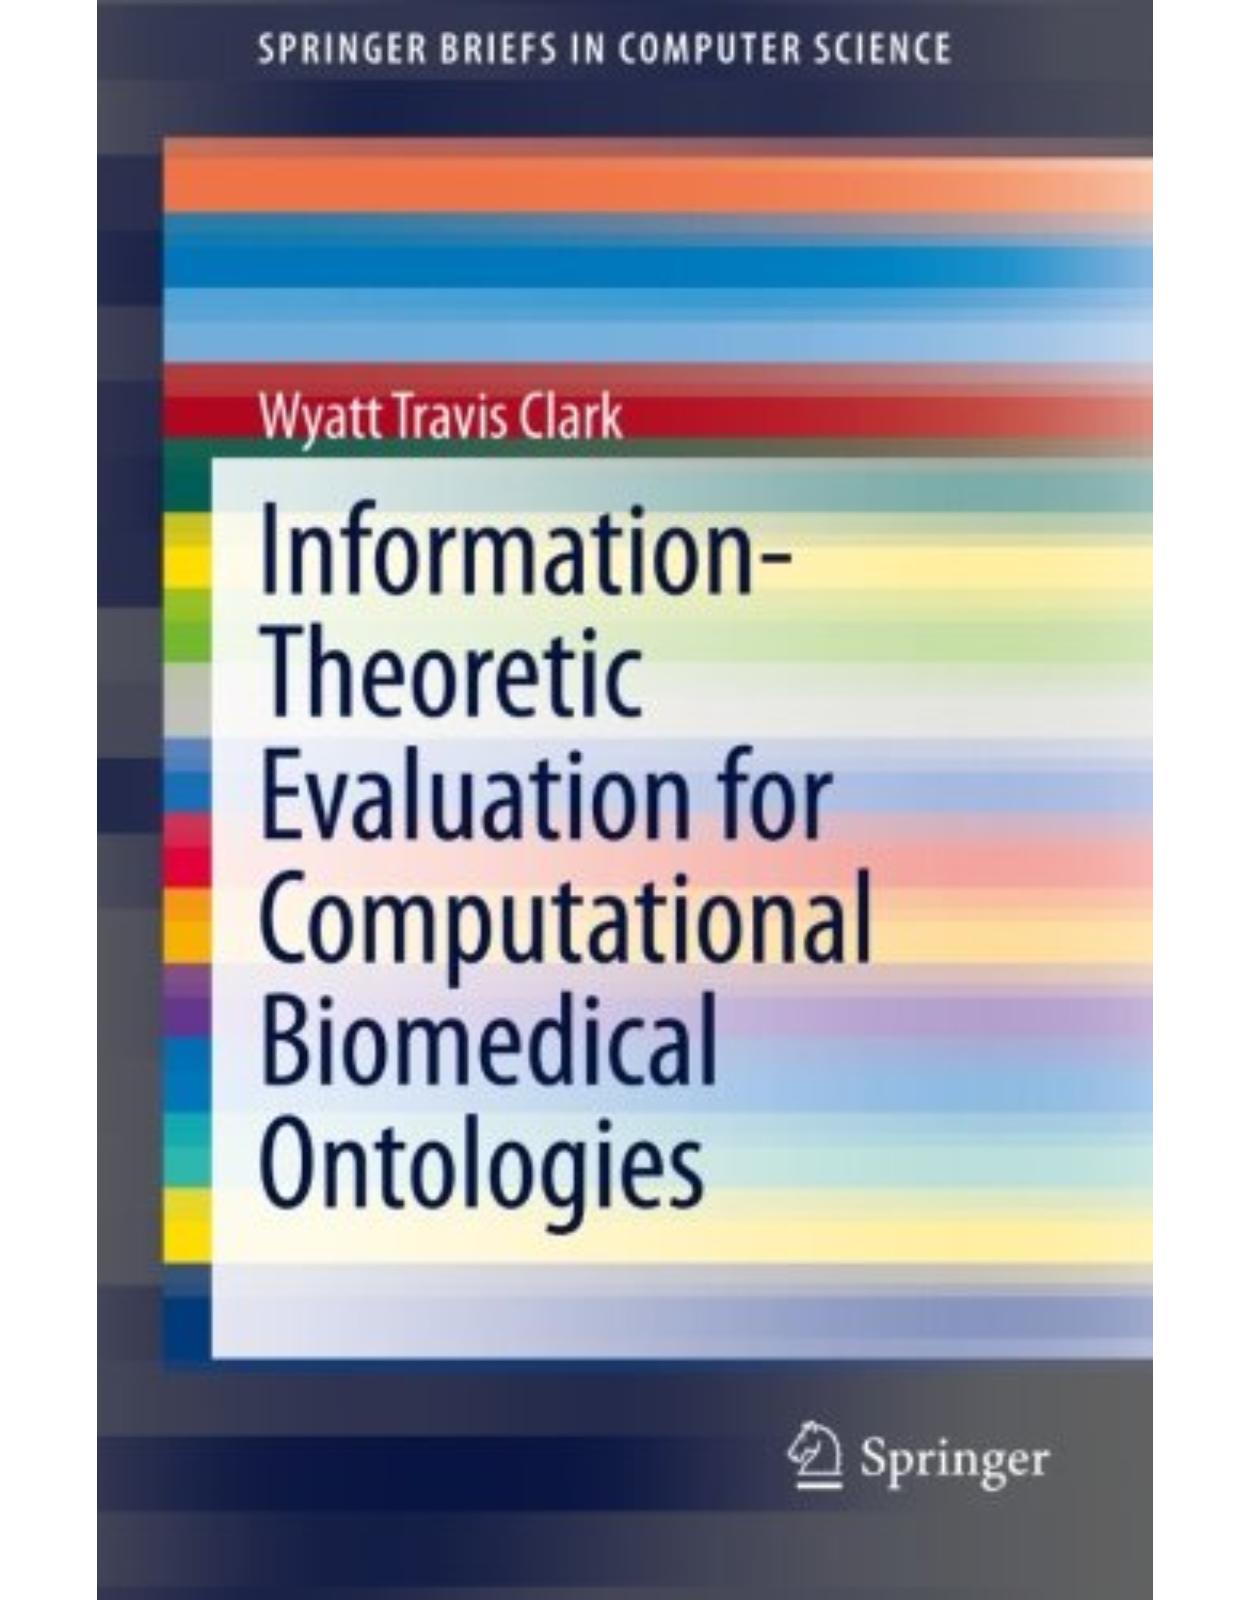 InformationTheoretic Evaluation for Computational Biomedical Ontologies